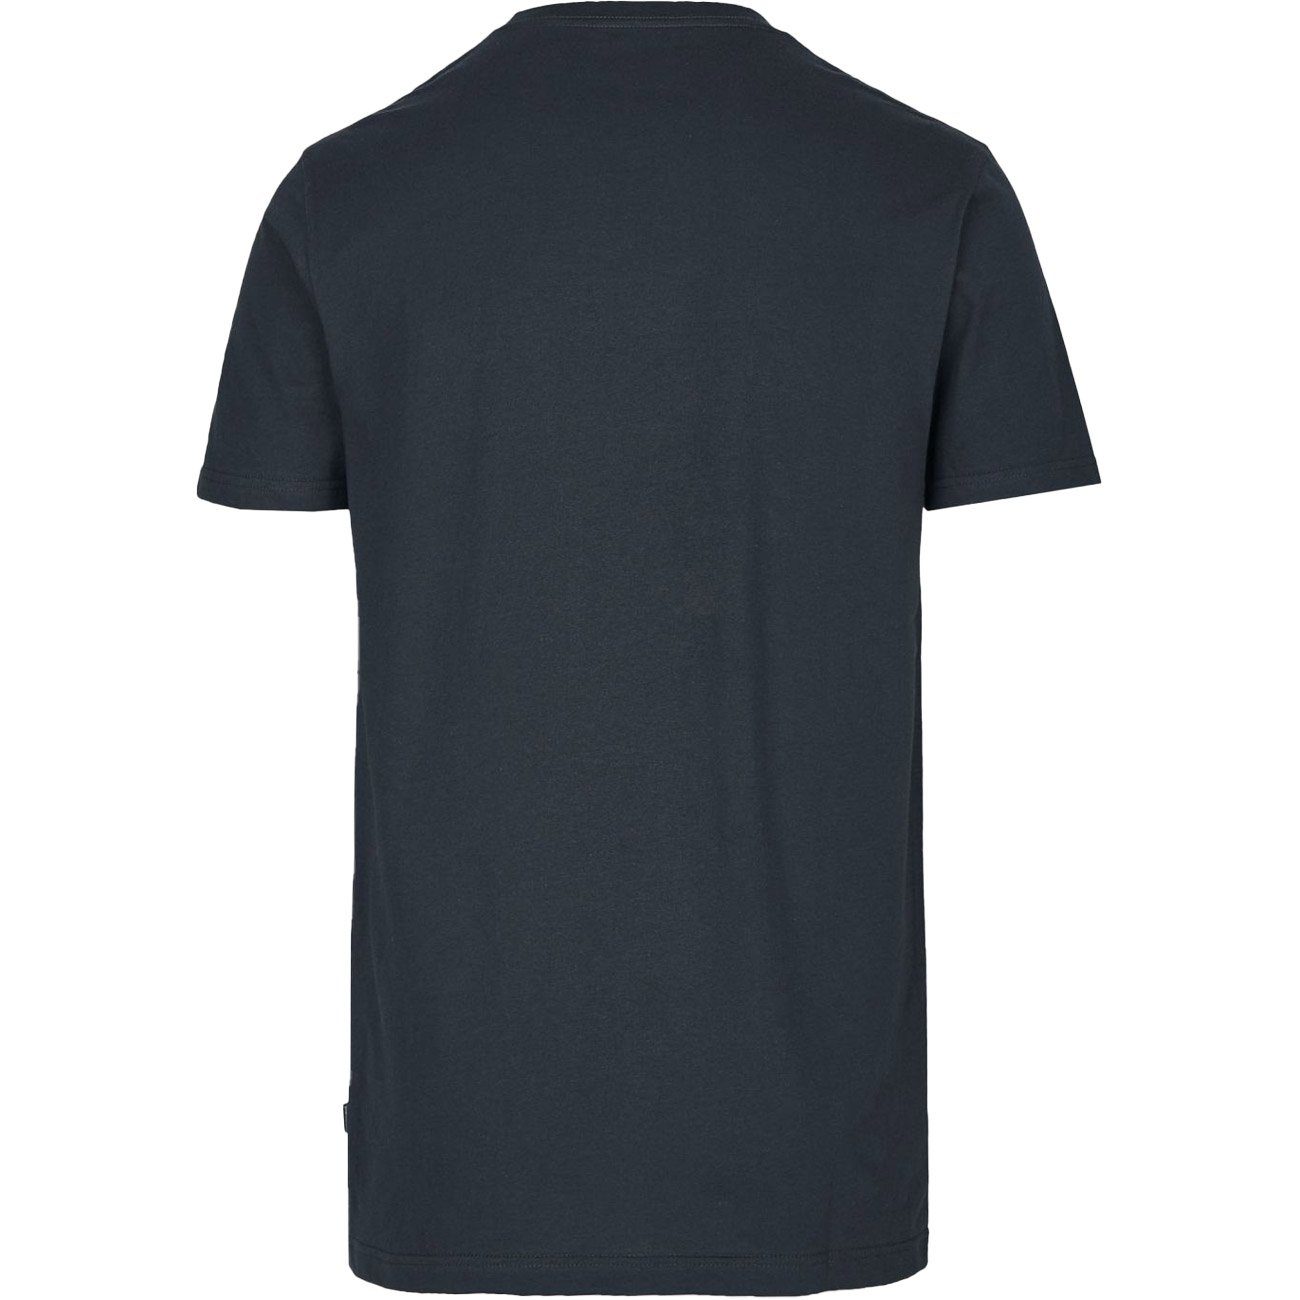 Regular blue Cleptomanicx T-Shirt Ligull mirage